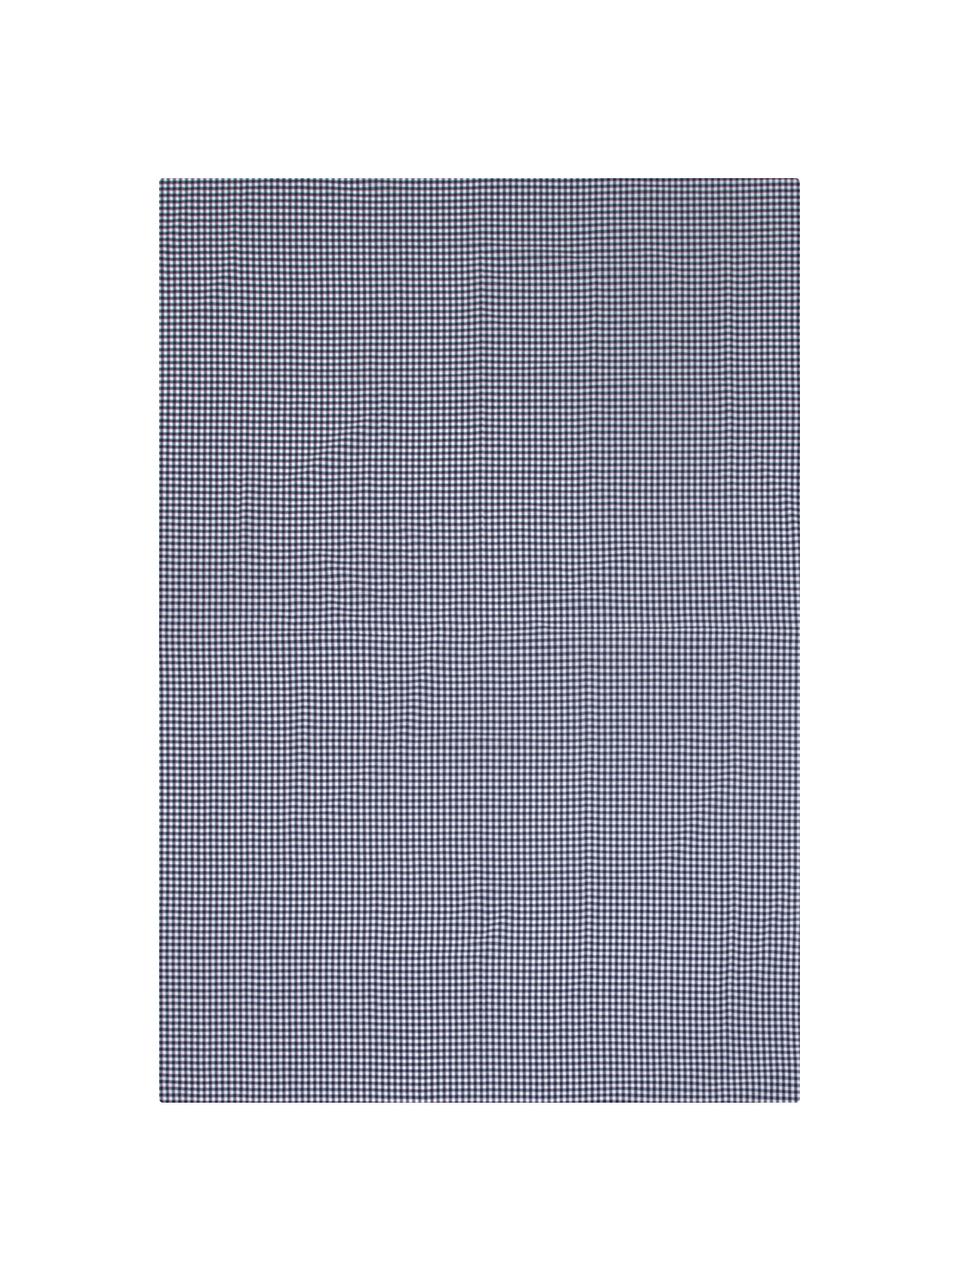 Baumwoll-Bettdeckenbezug Scotty, kariert, Baumwolle, Blau/Weiss, B 200 x L 210 cm